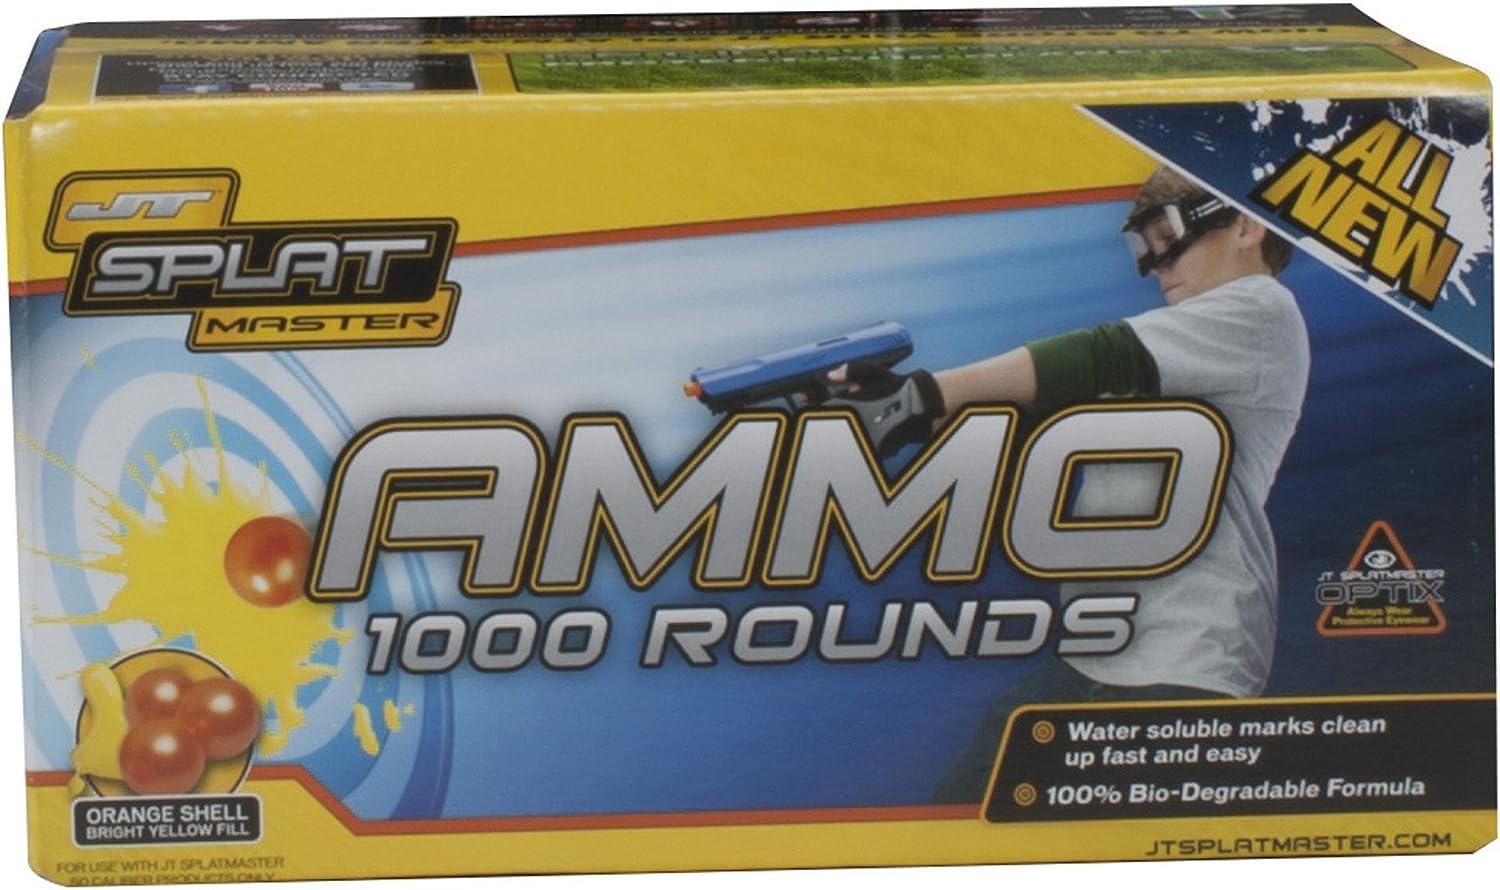  May Vary 500 Paintball Pellets .68 Caliber : Paintball Guns :  Sports & Outdoors